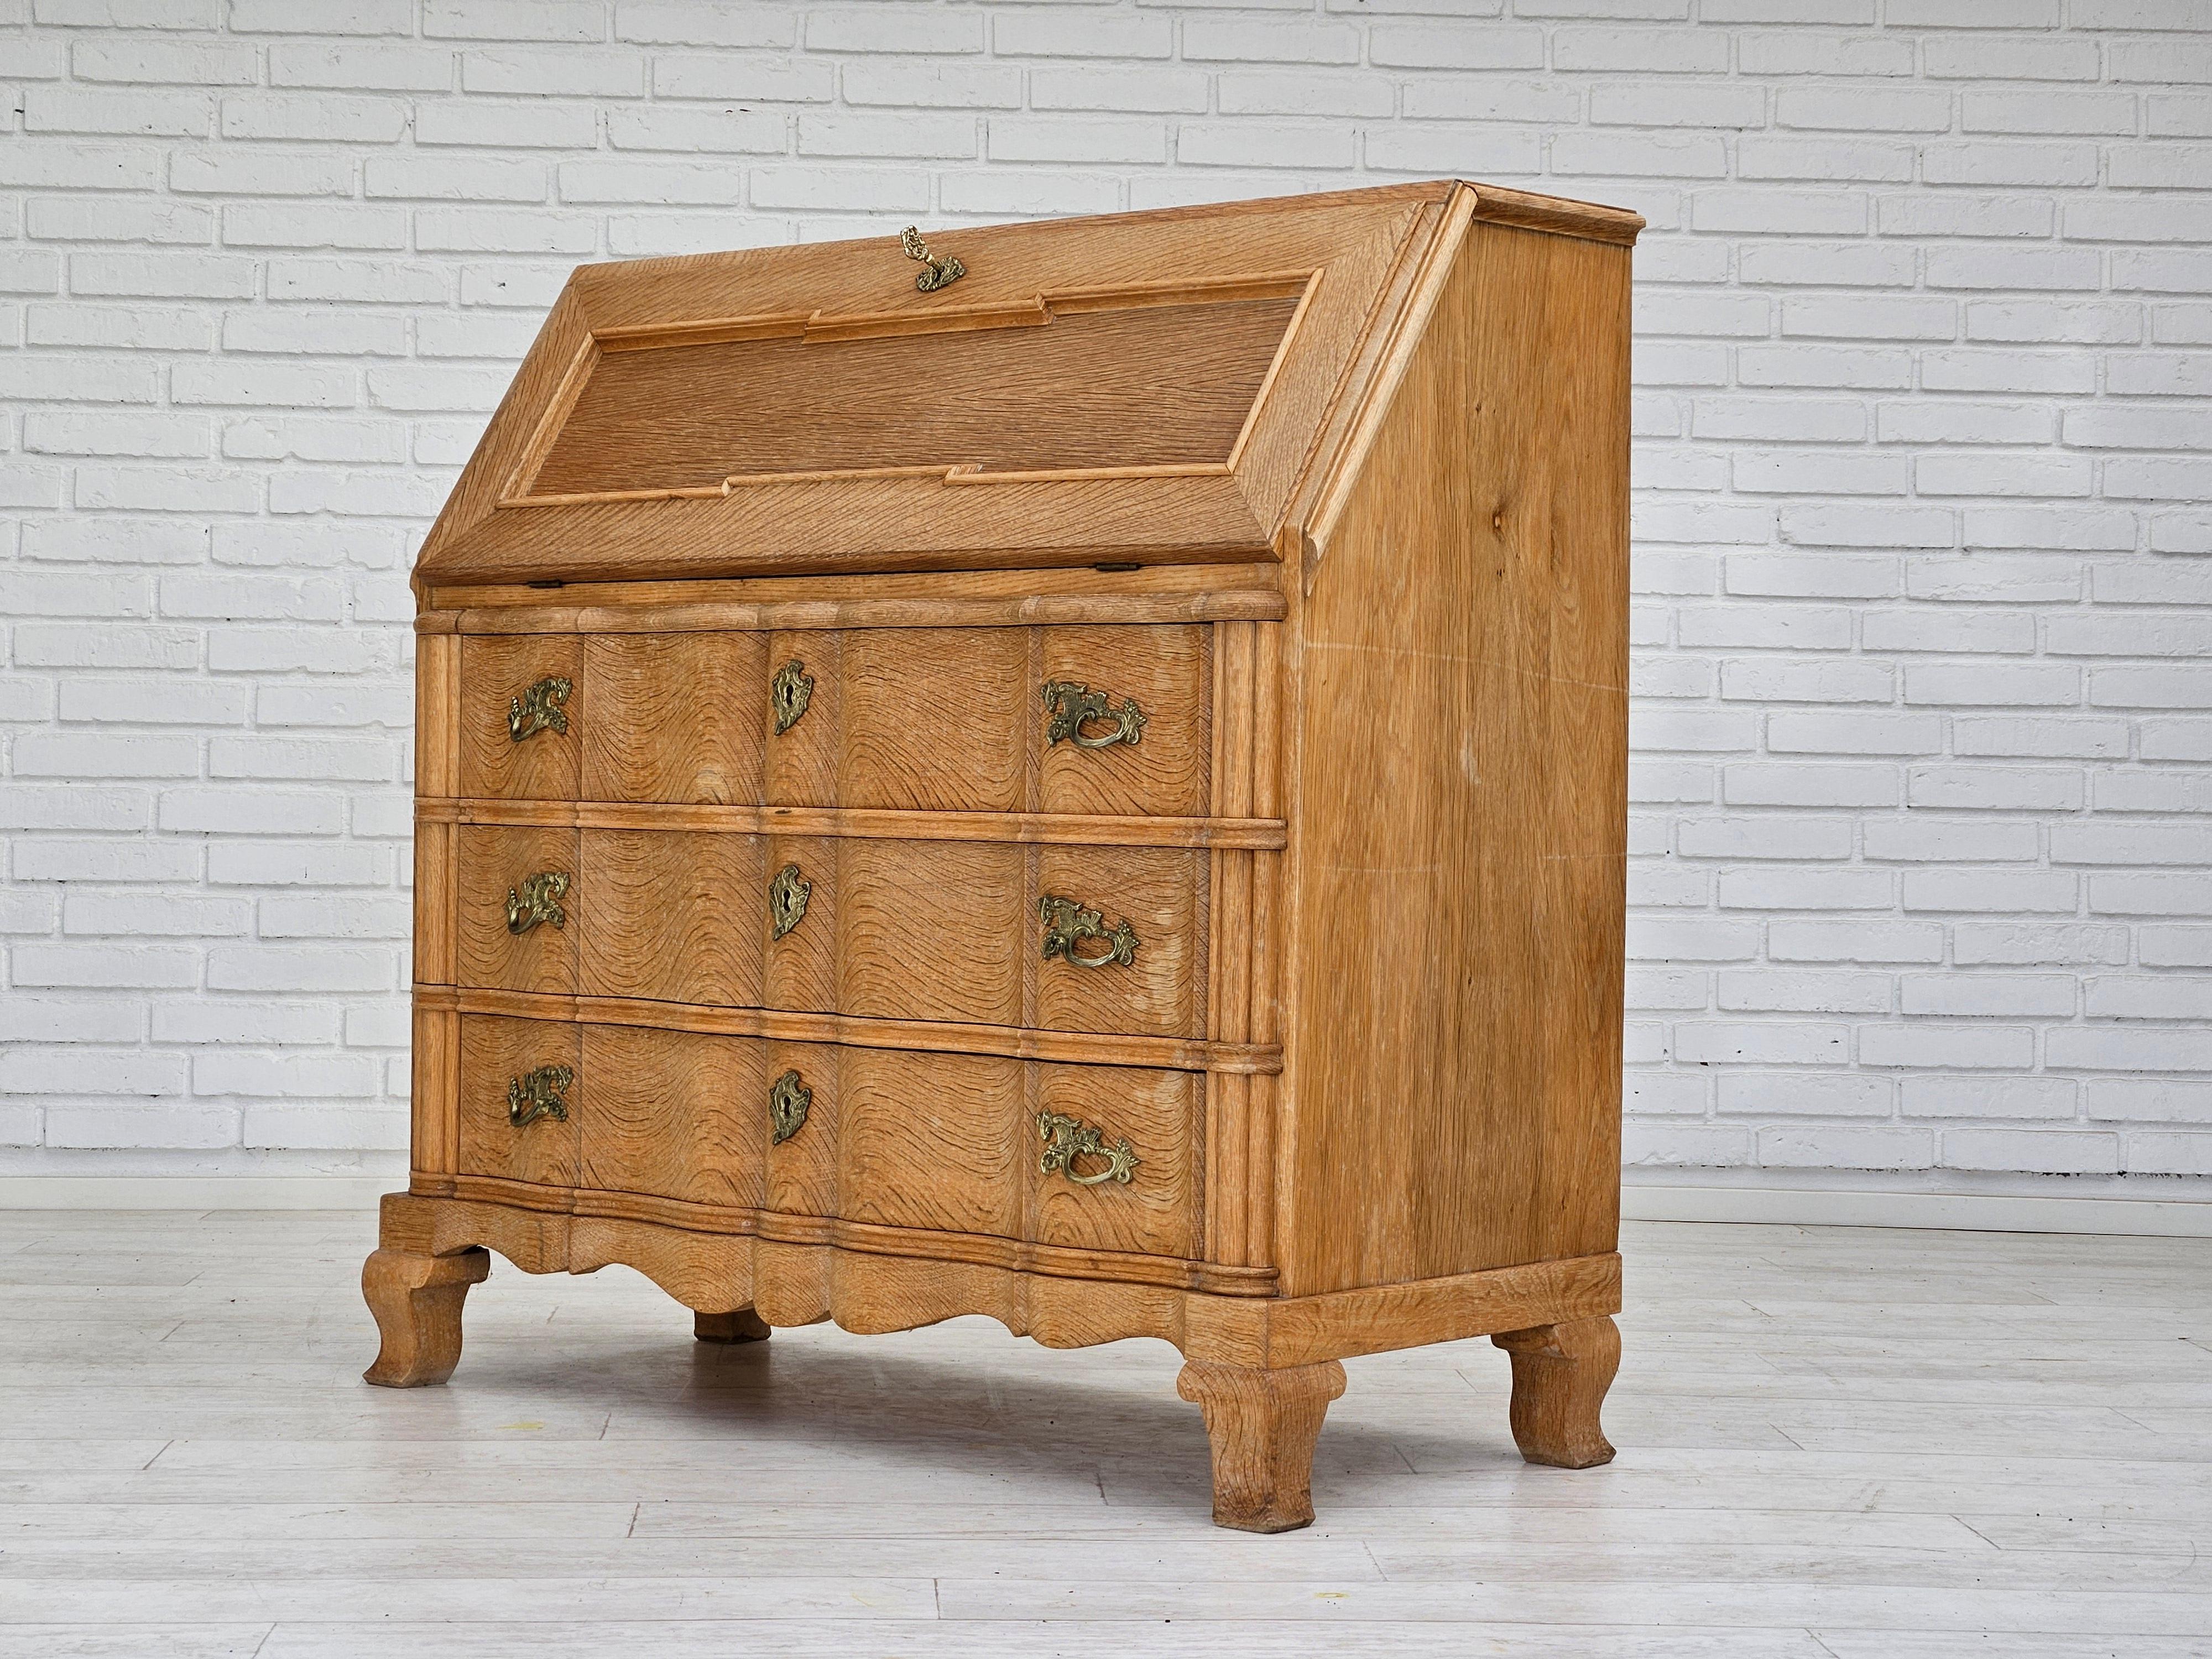 1970s, Danish chest of drawers, oak wood, original condition. 9